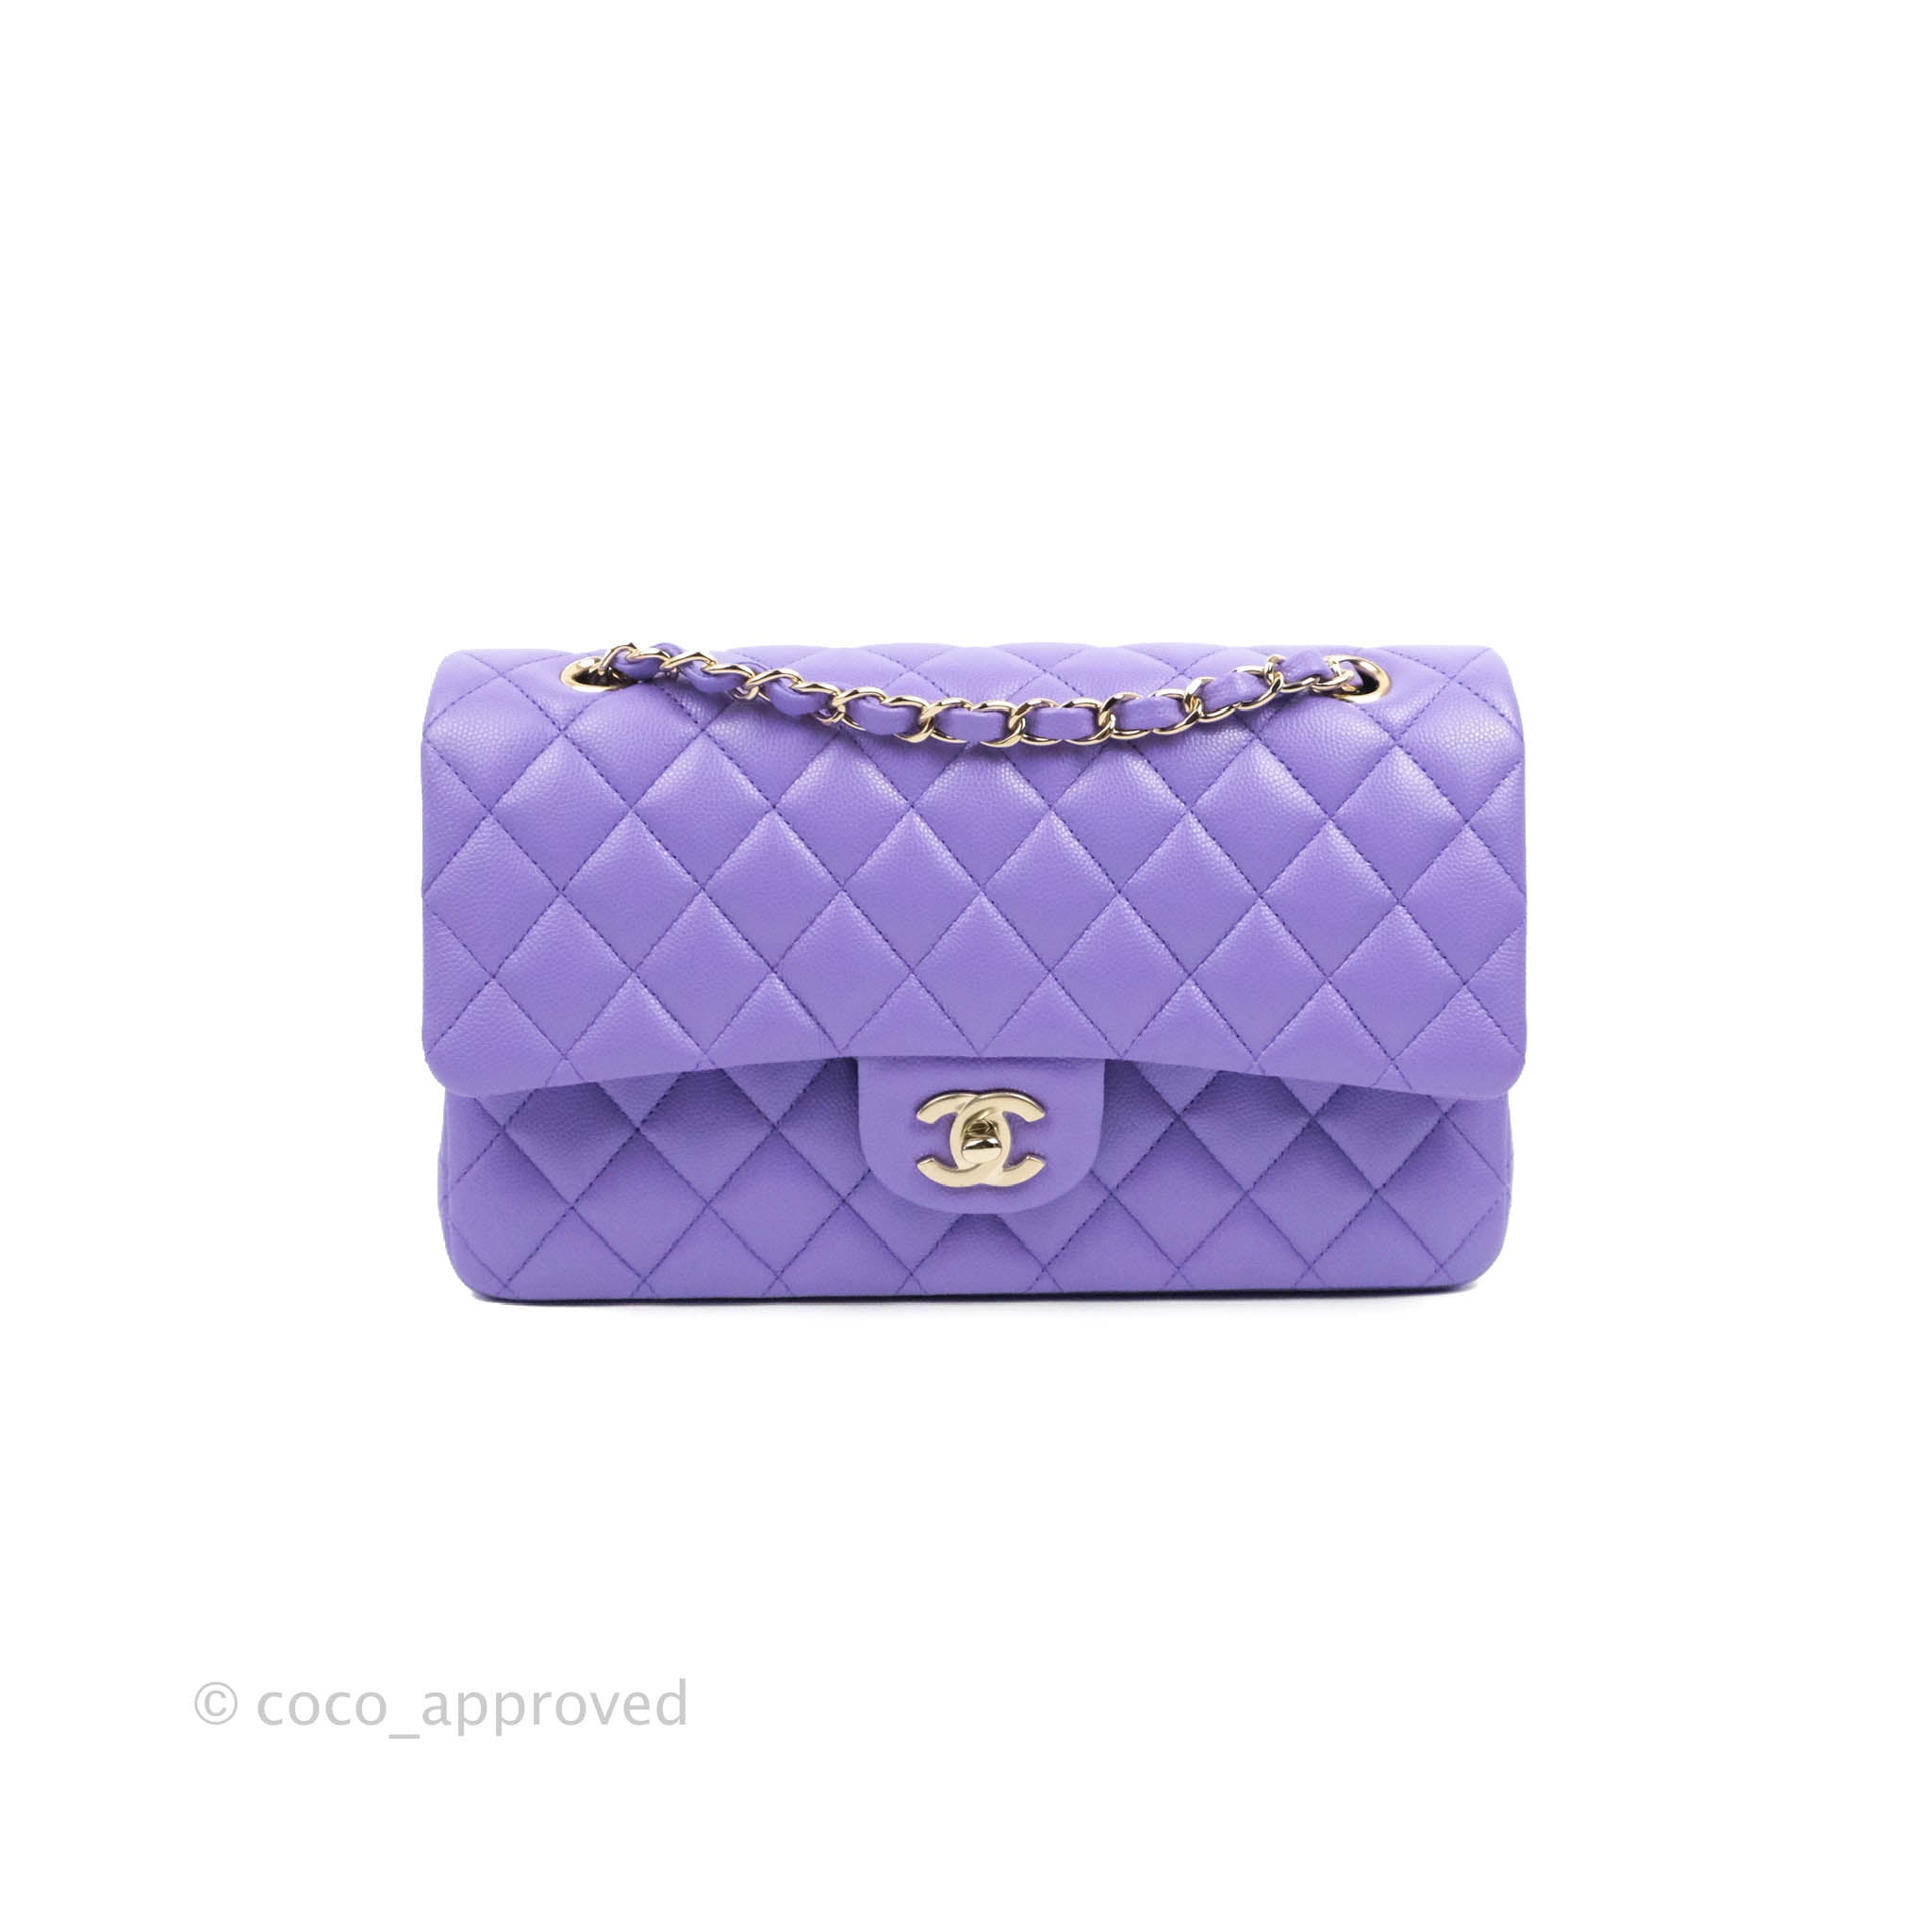 Chanel Classic Medium Double Flap, Light Purple Caviar Leather